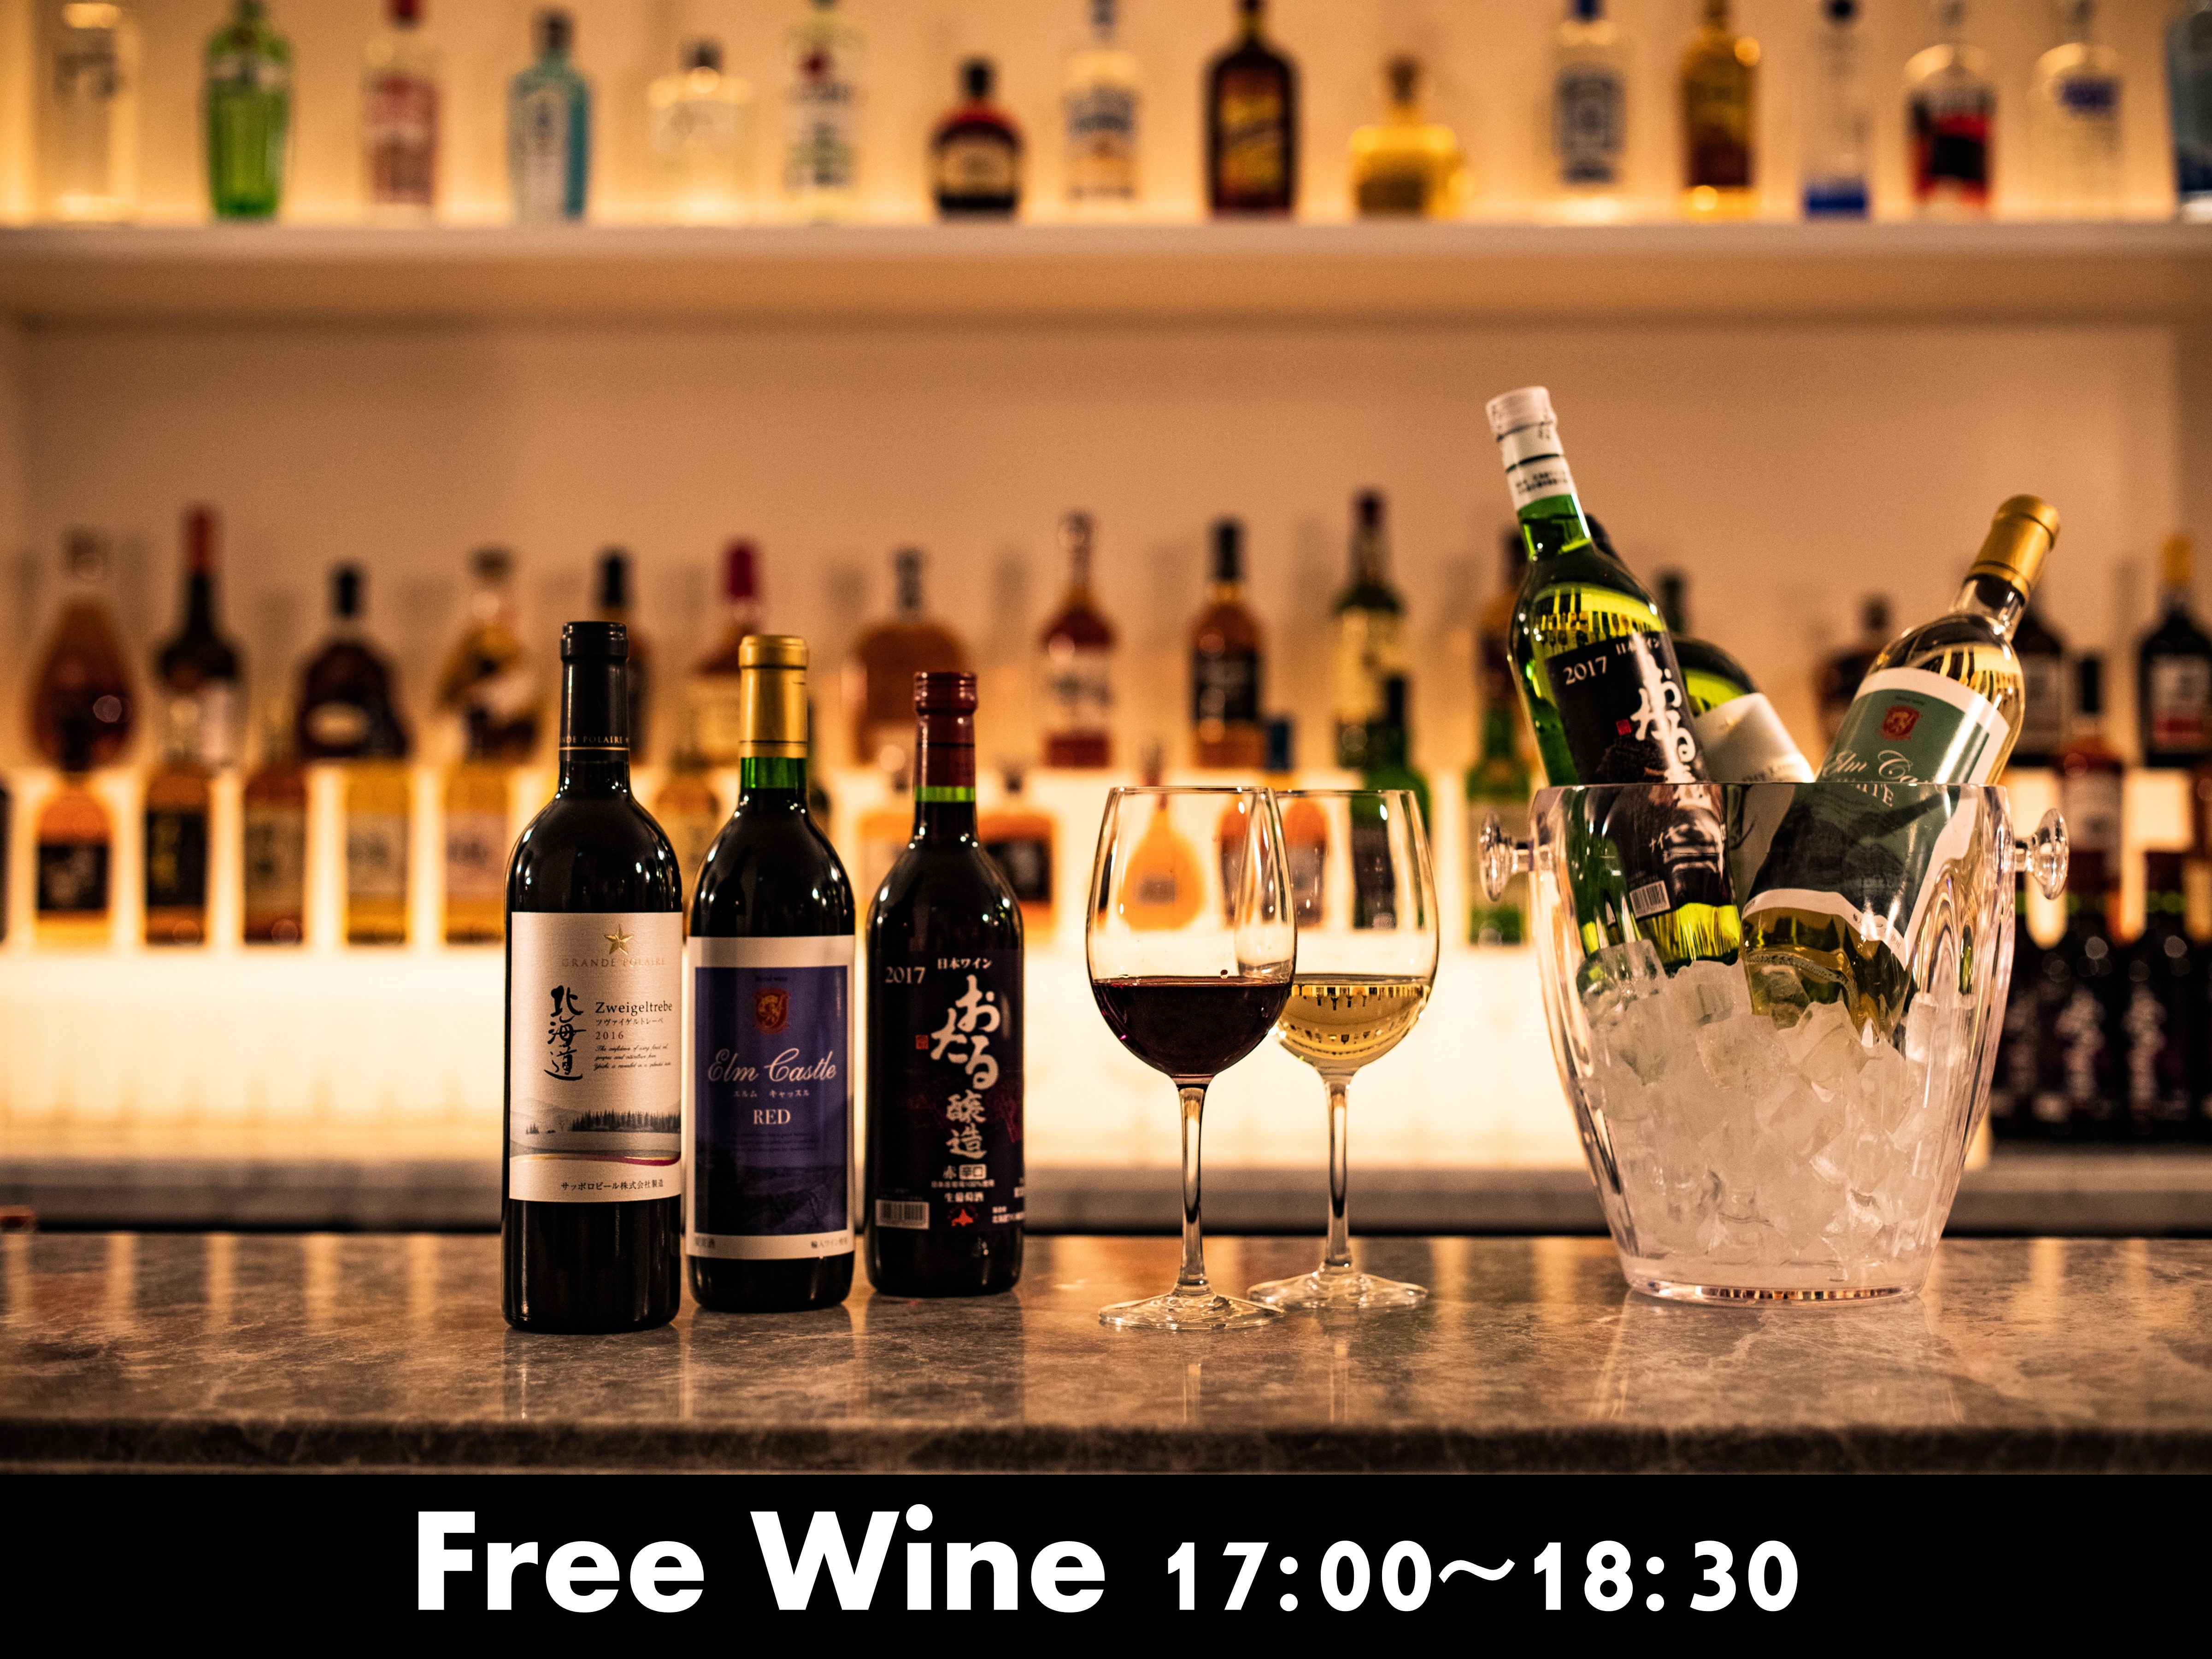 Free wine service time 17: 00-18: 30